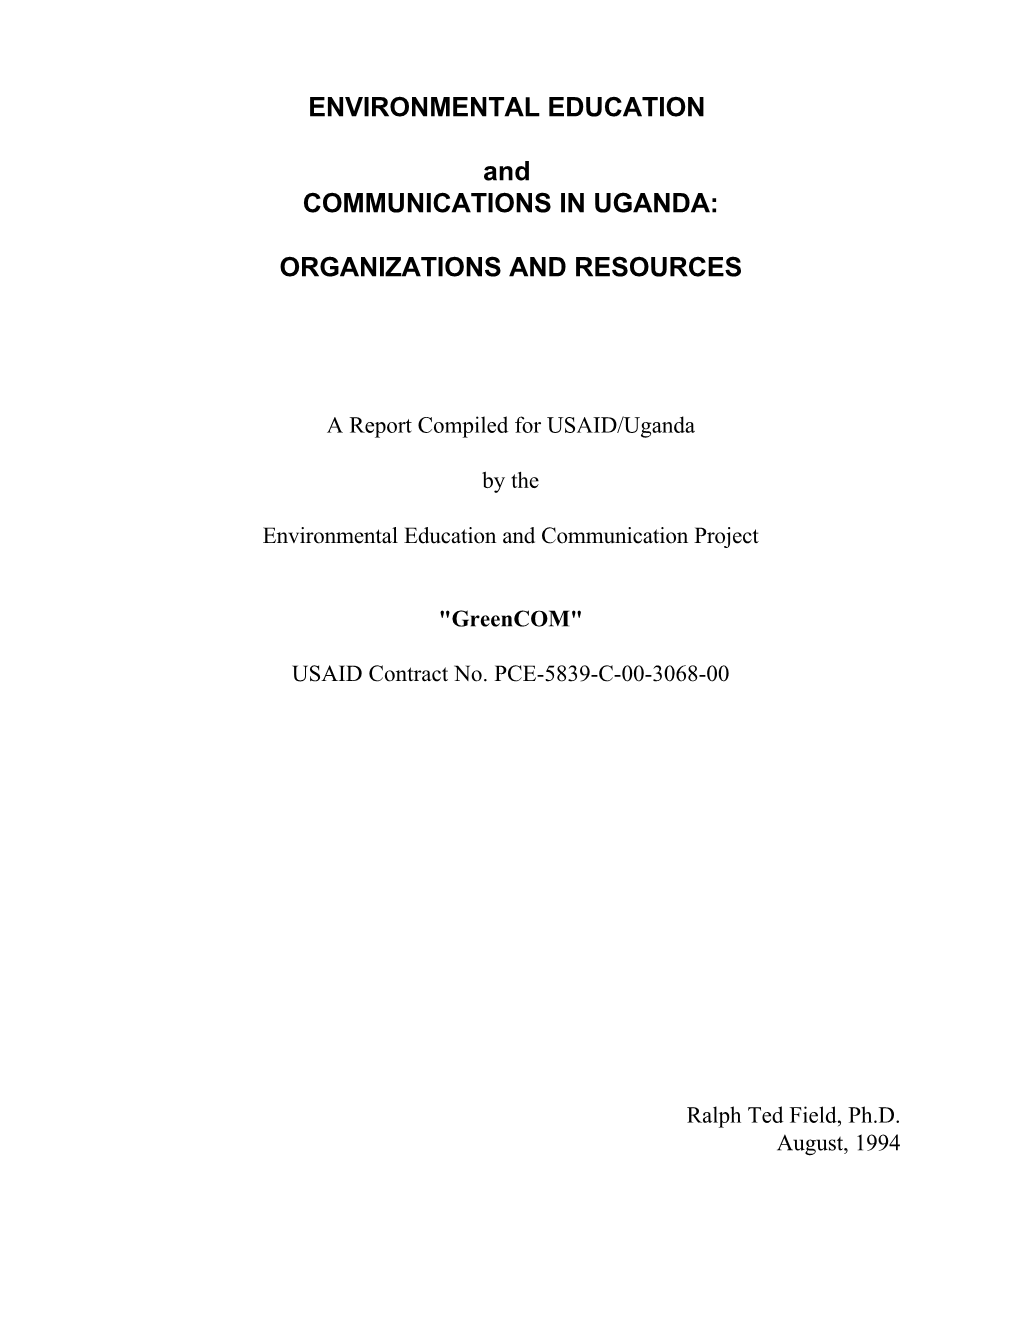 ENVIRONMENTAL EDUCATION and COMMUNICATIONS in UGANDA